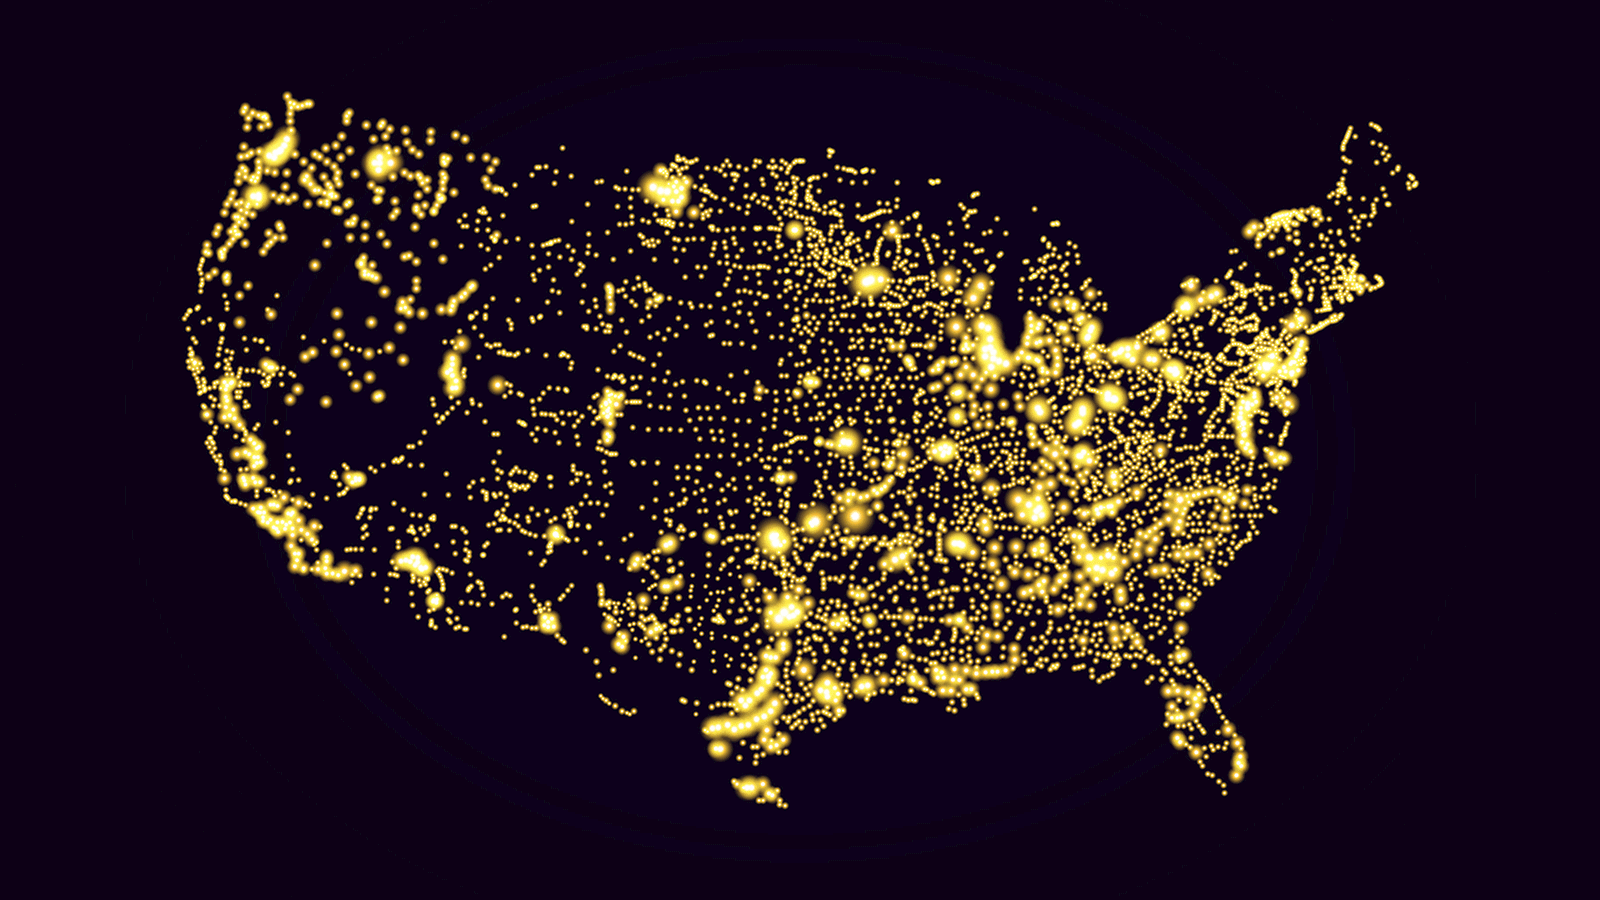 Satellite view of USA at night